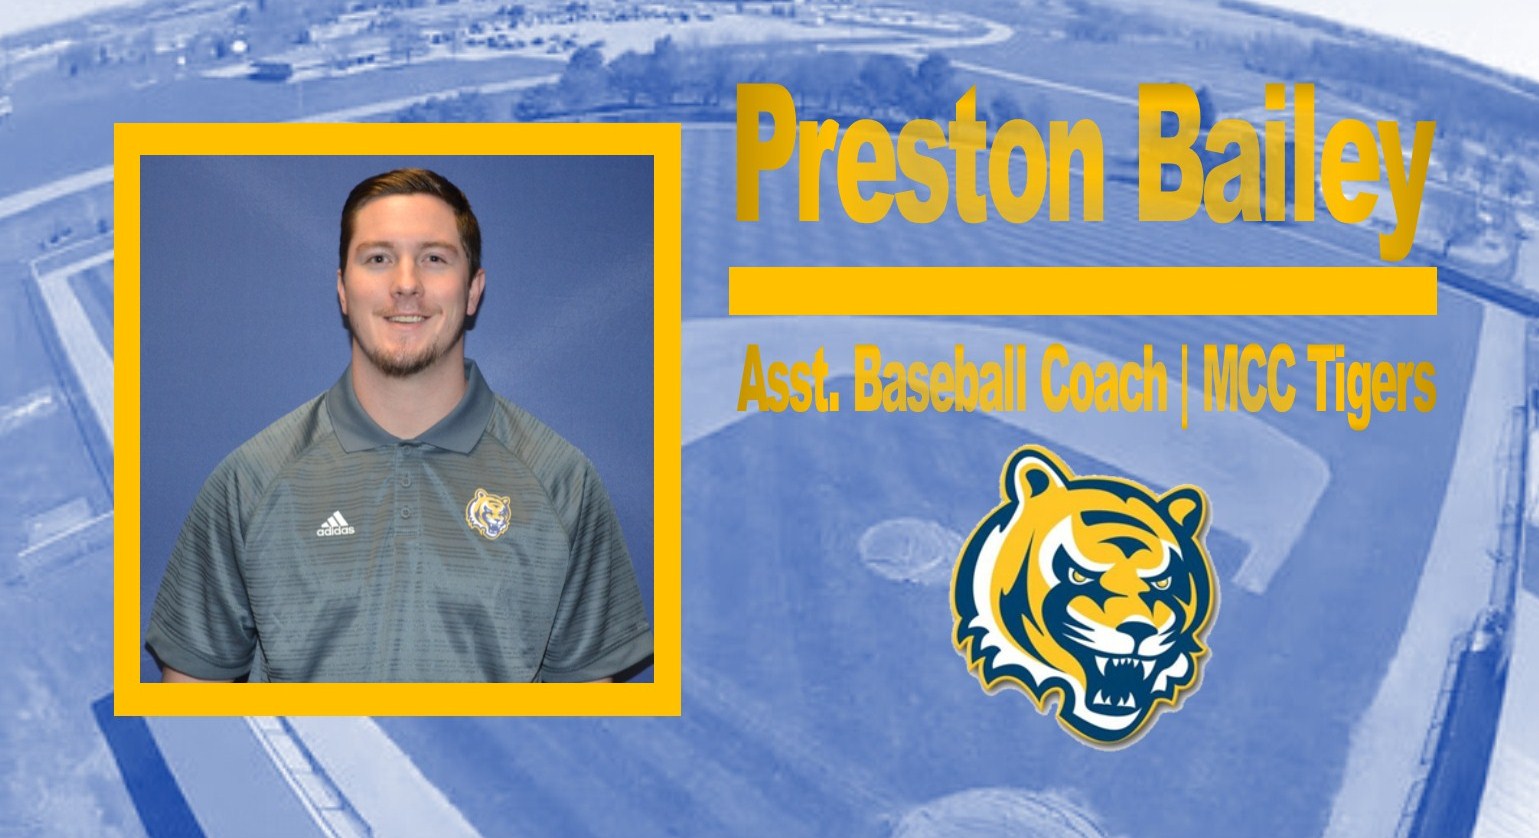 Preston Bailey announced Assistant Baseball Coach